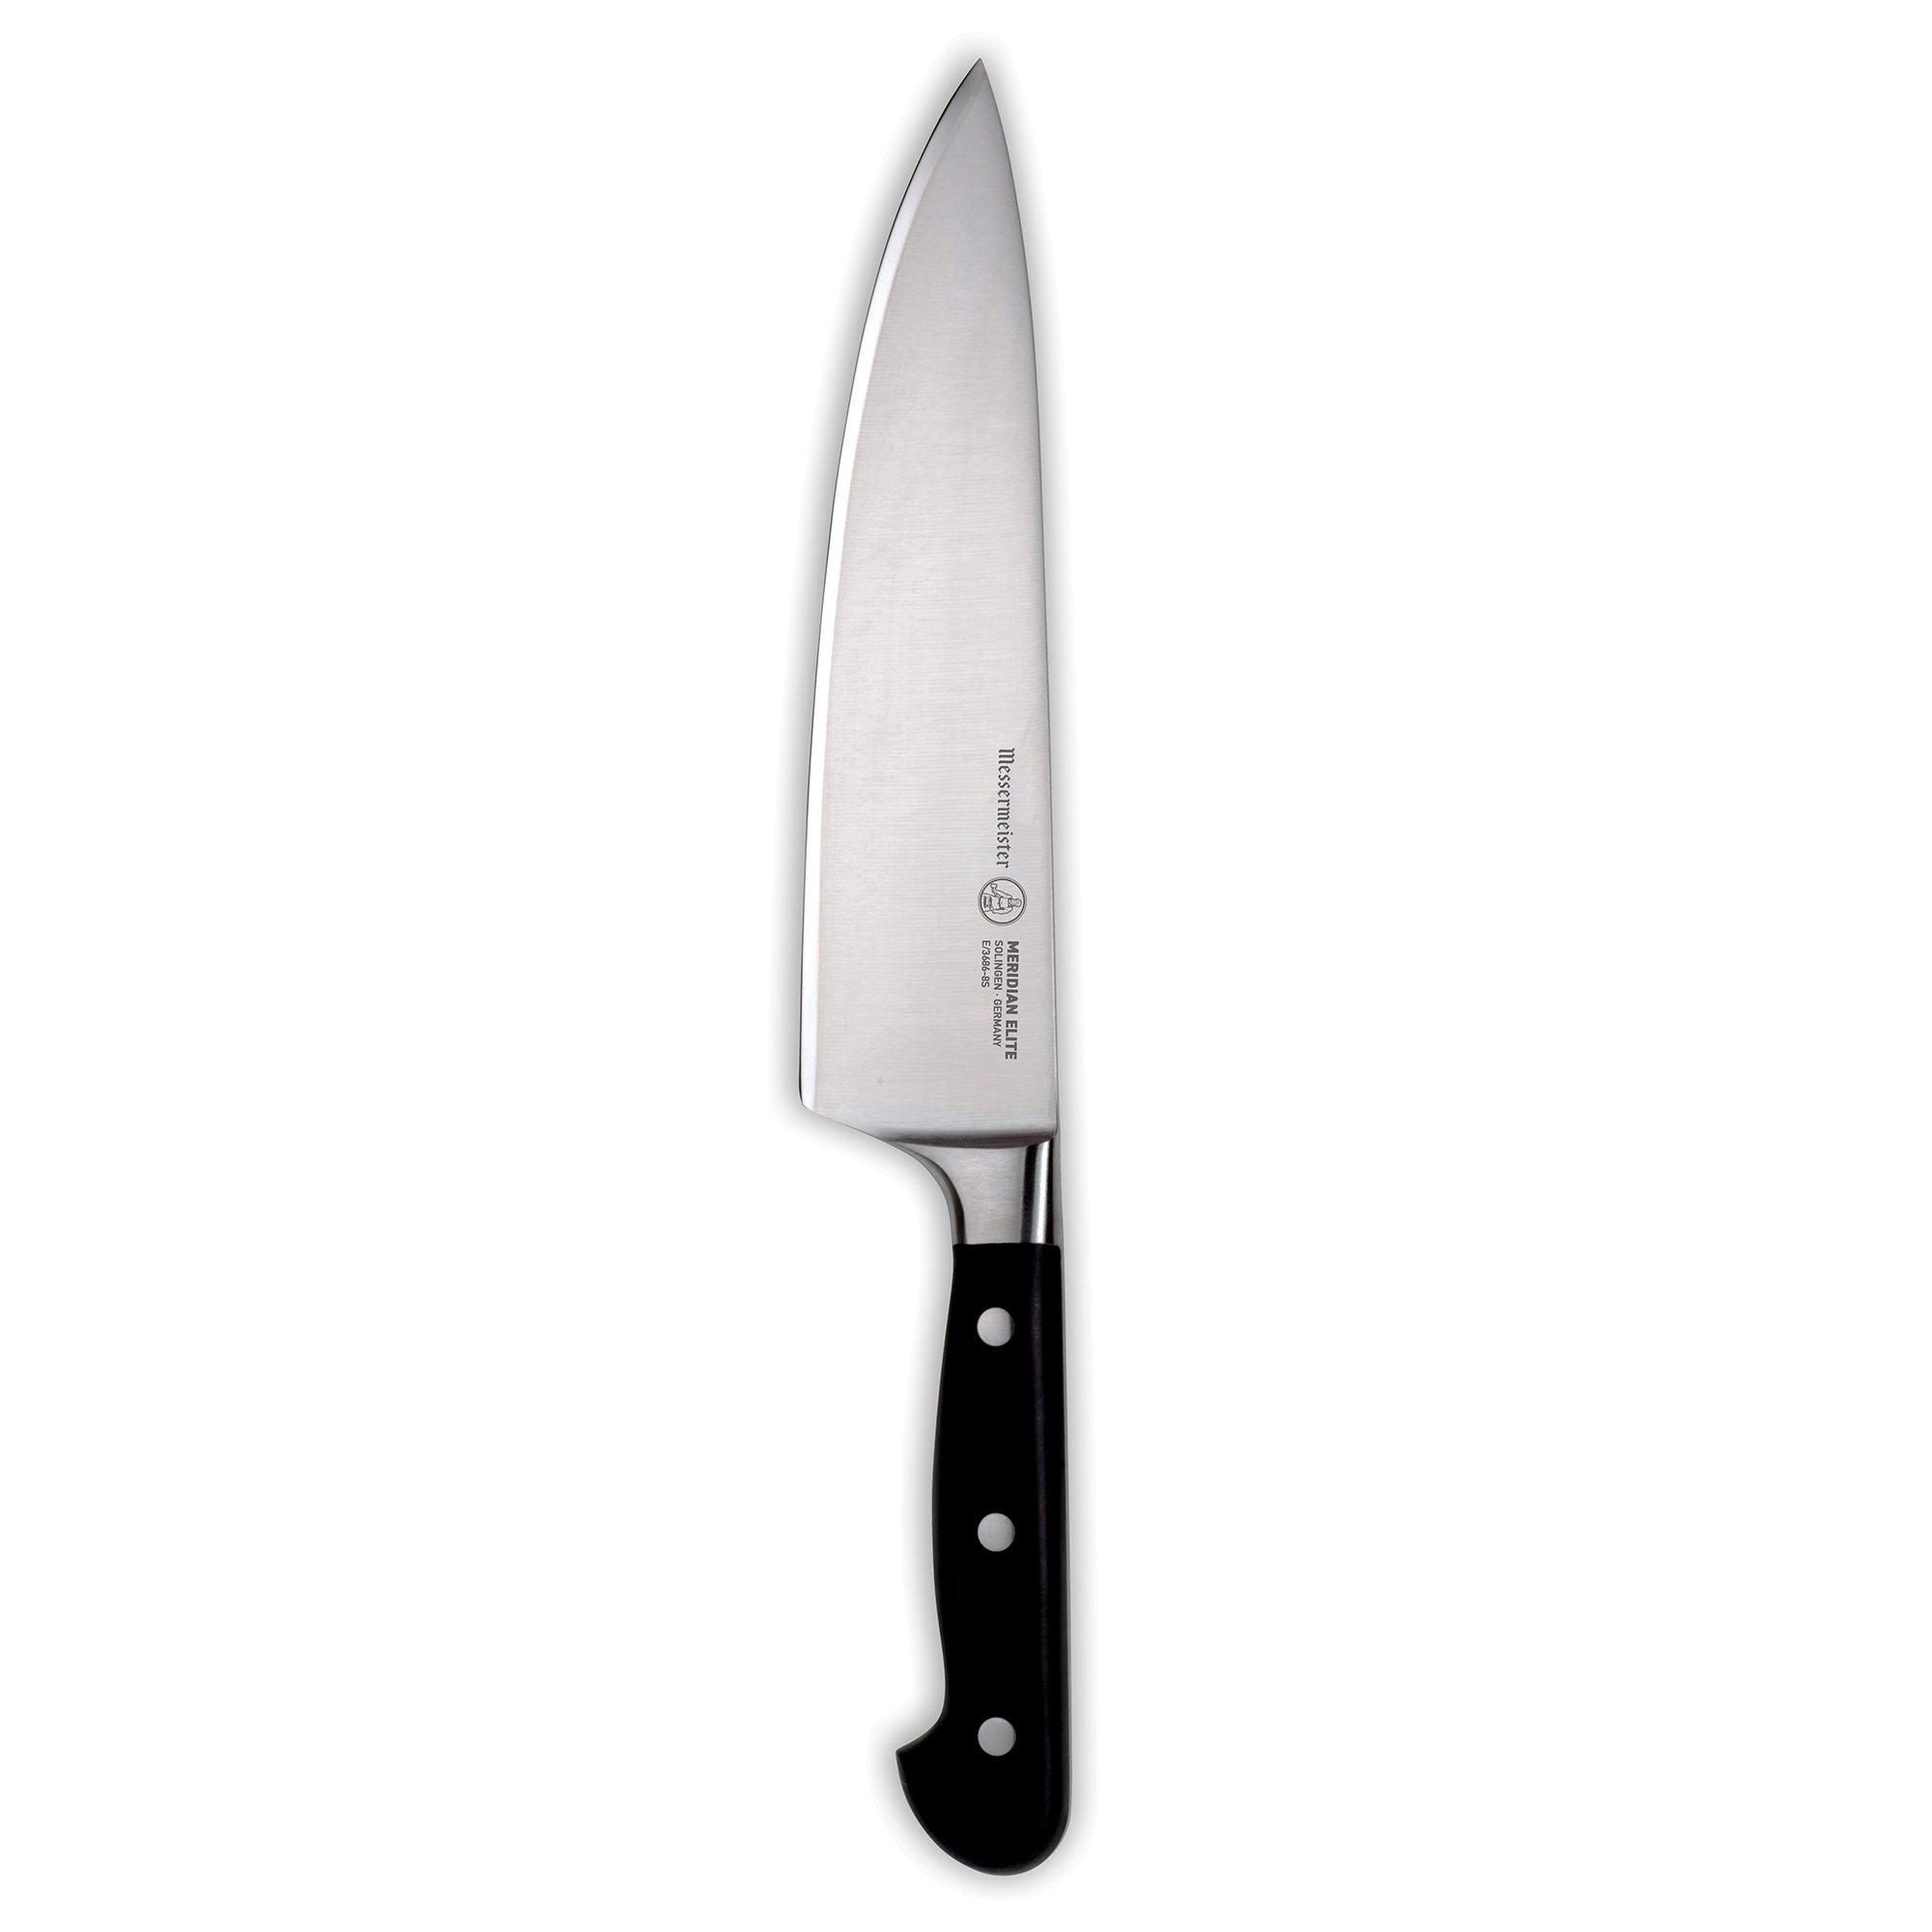 Wusthof Classic Ikon Cook's Knife, 8, 2 Lb, 8 Inch, Black